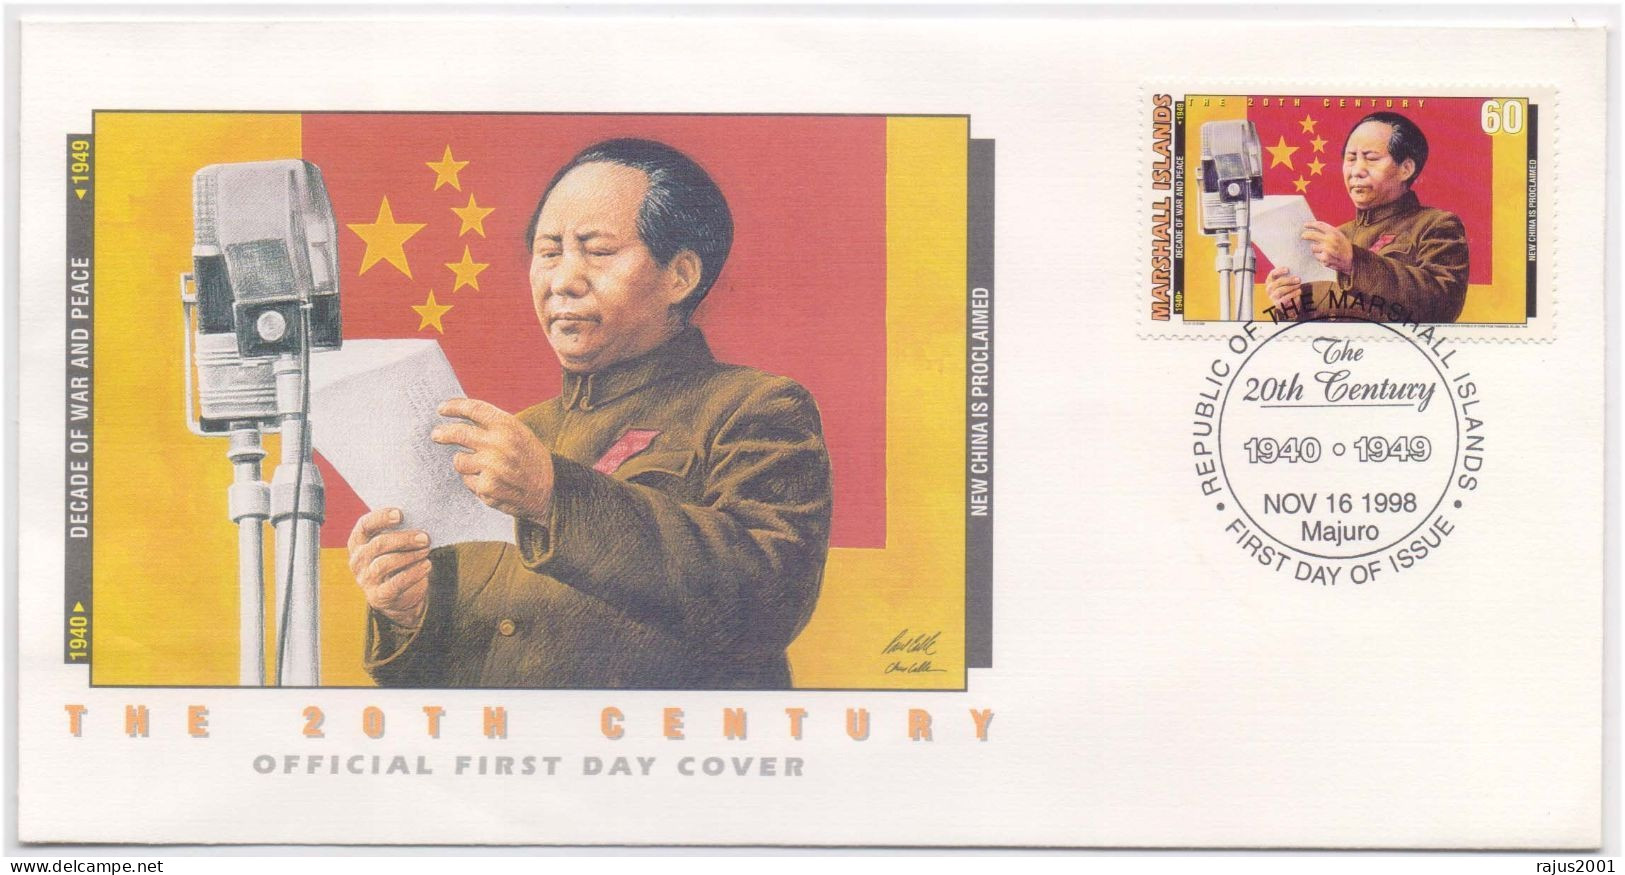 Mao Zedong, Mao Tse-Tung Leads China's Revolution, Chinese Revolutionary Communist Leader, History Marshall Islands FDC - Mao Tse-Tung